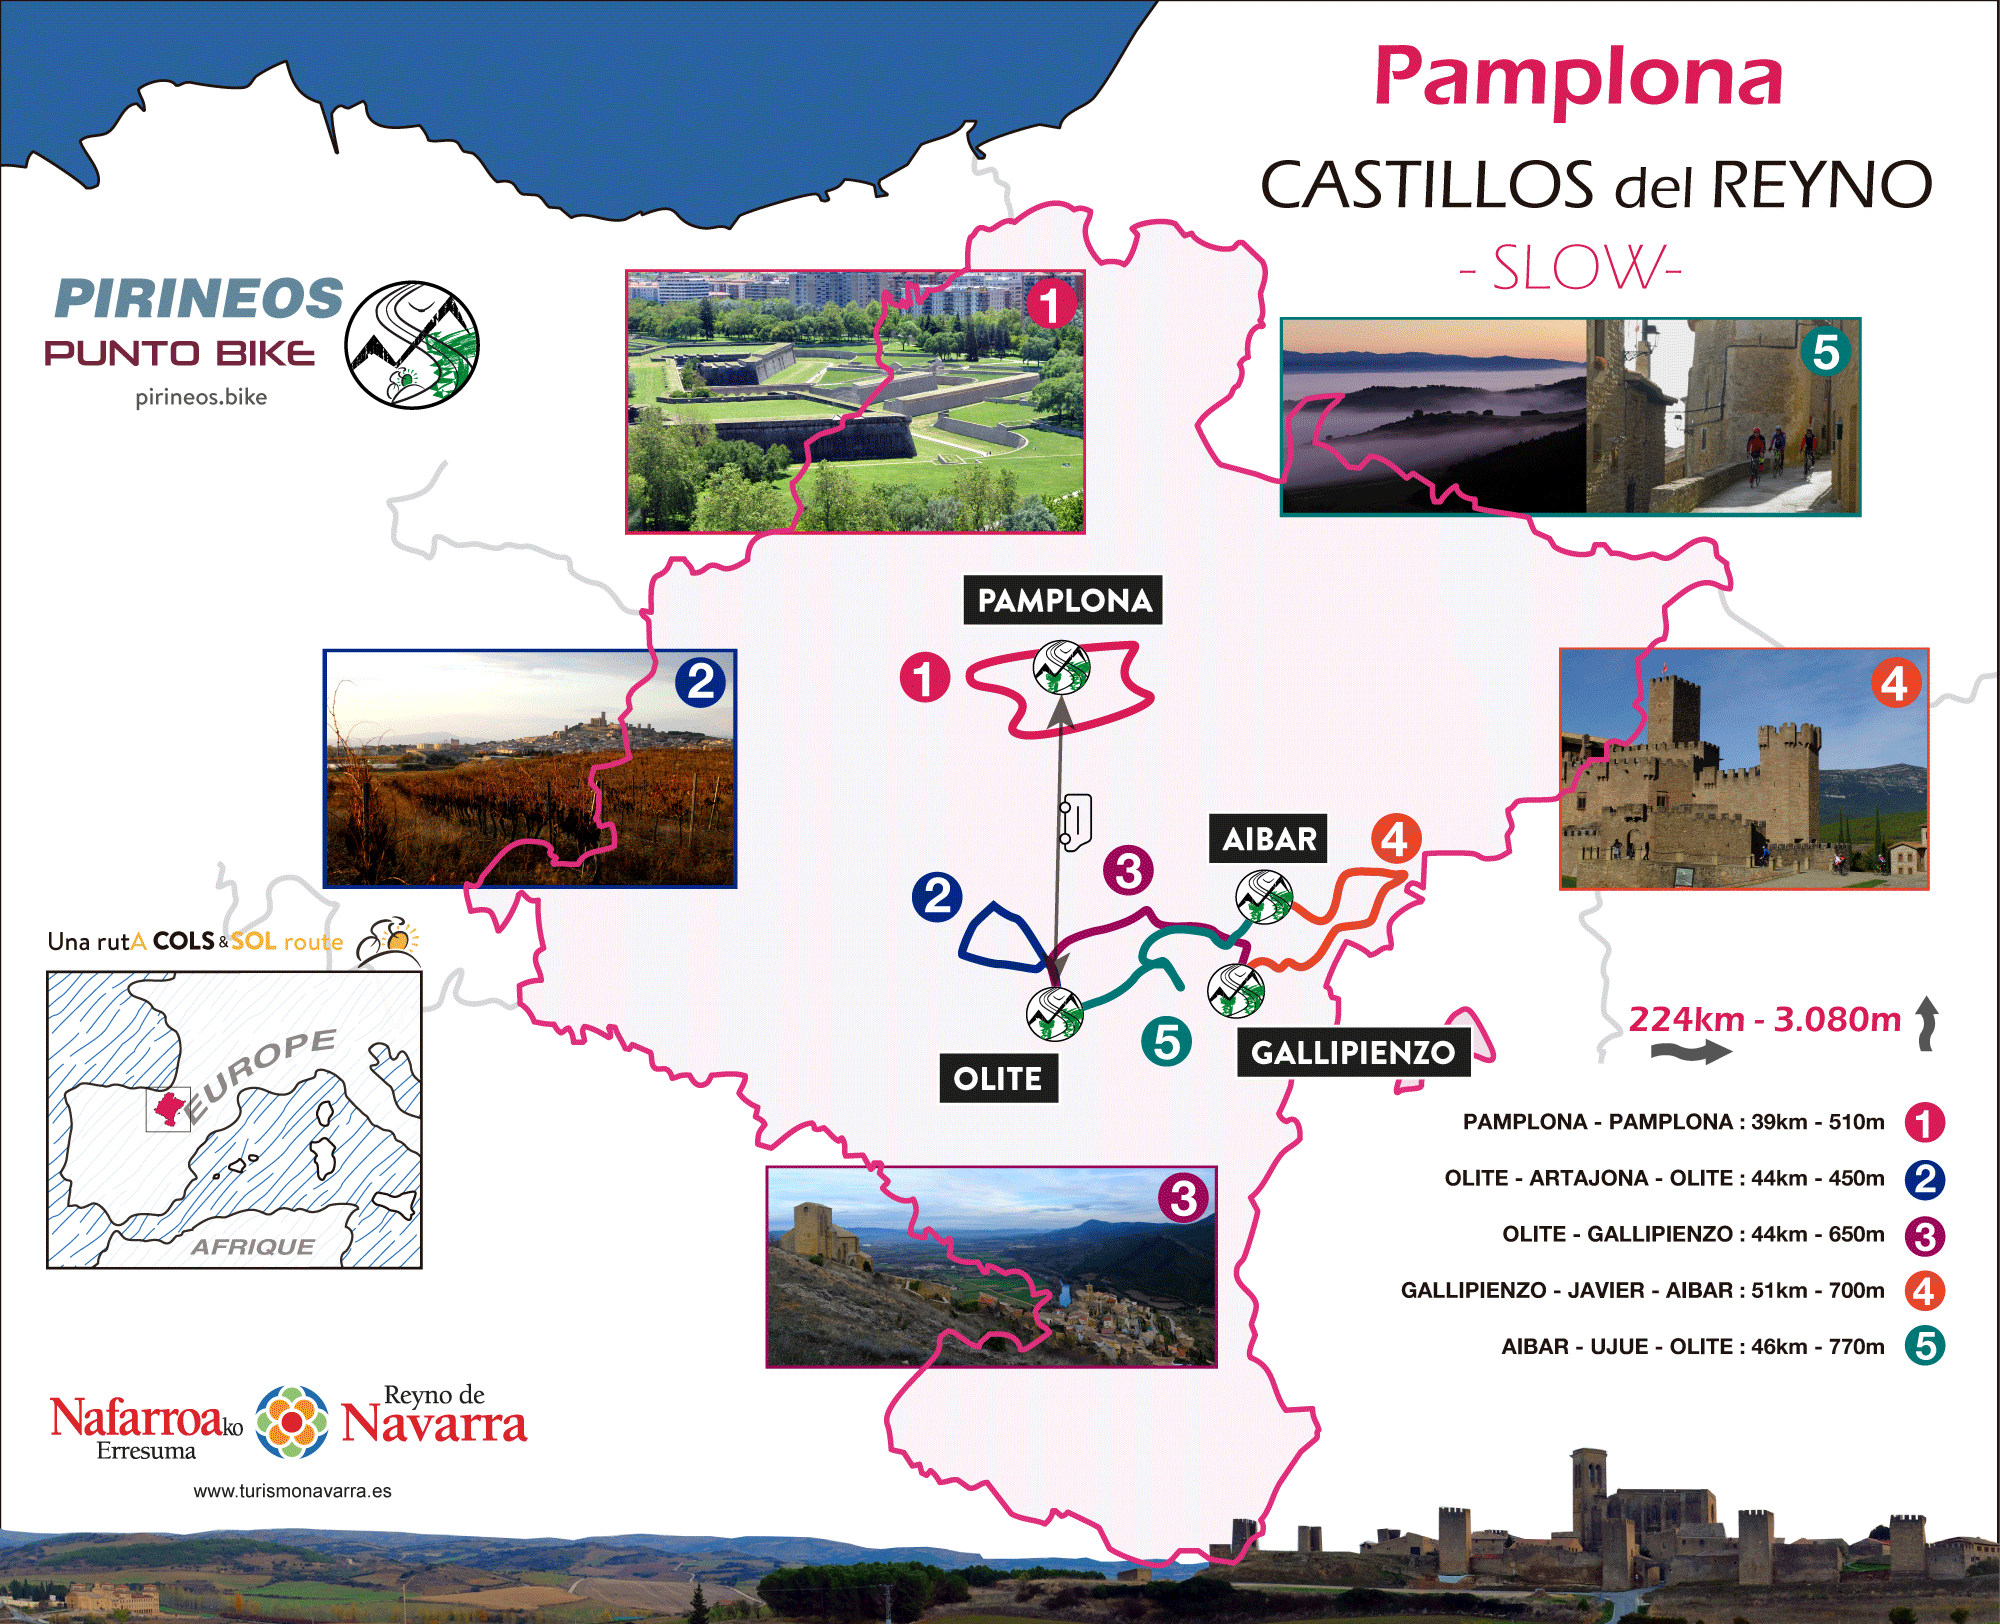 Castillos-del-Reyno-Slow-map